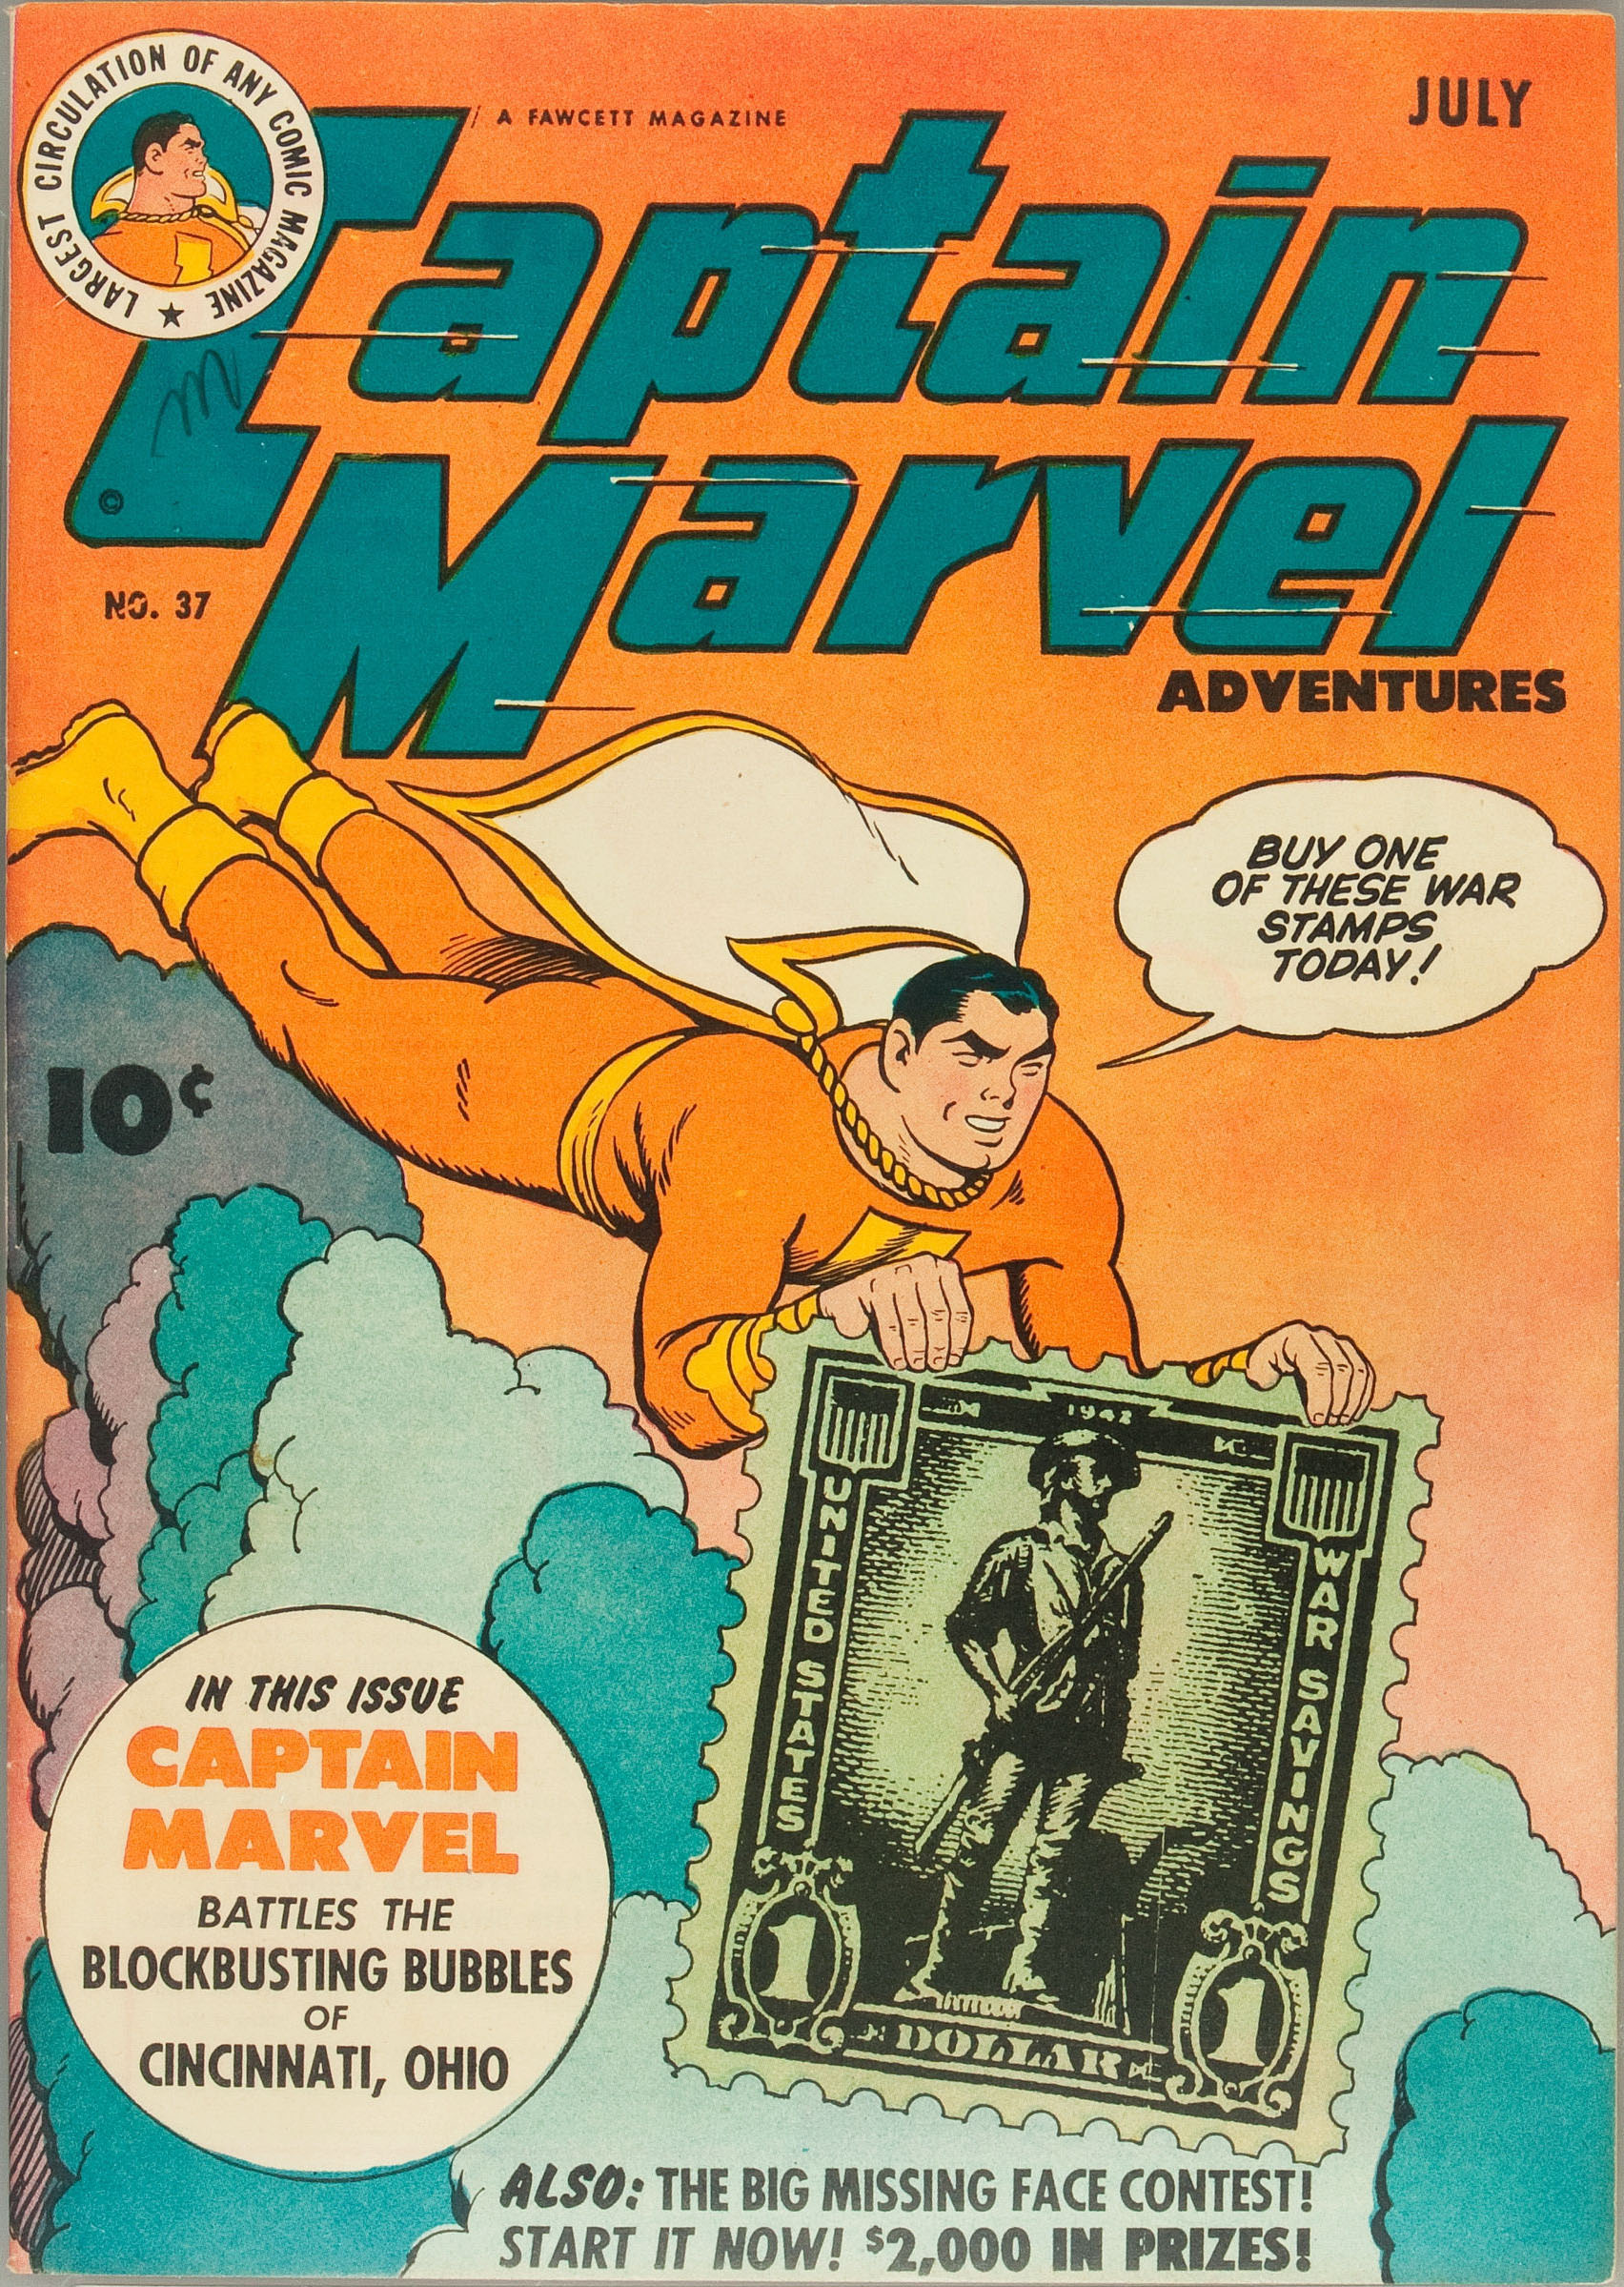 Adventures magazine. The Adventures of Captain Comic. Captain Marvel Fawcett last Comics Cover. Blockbusting.